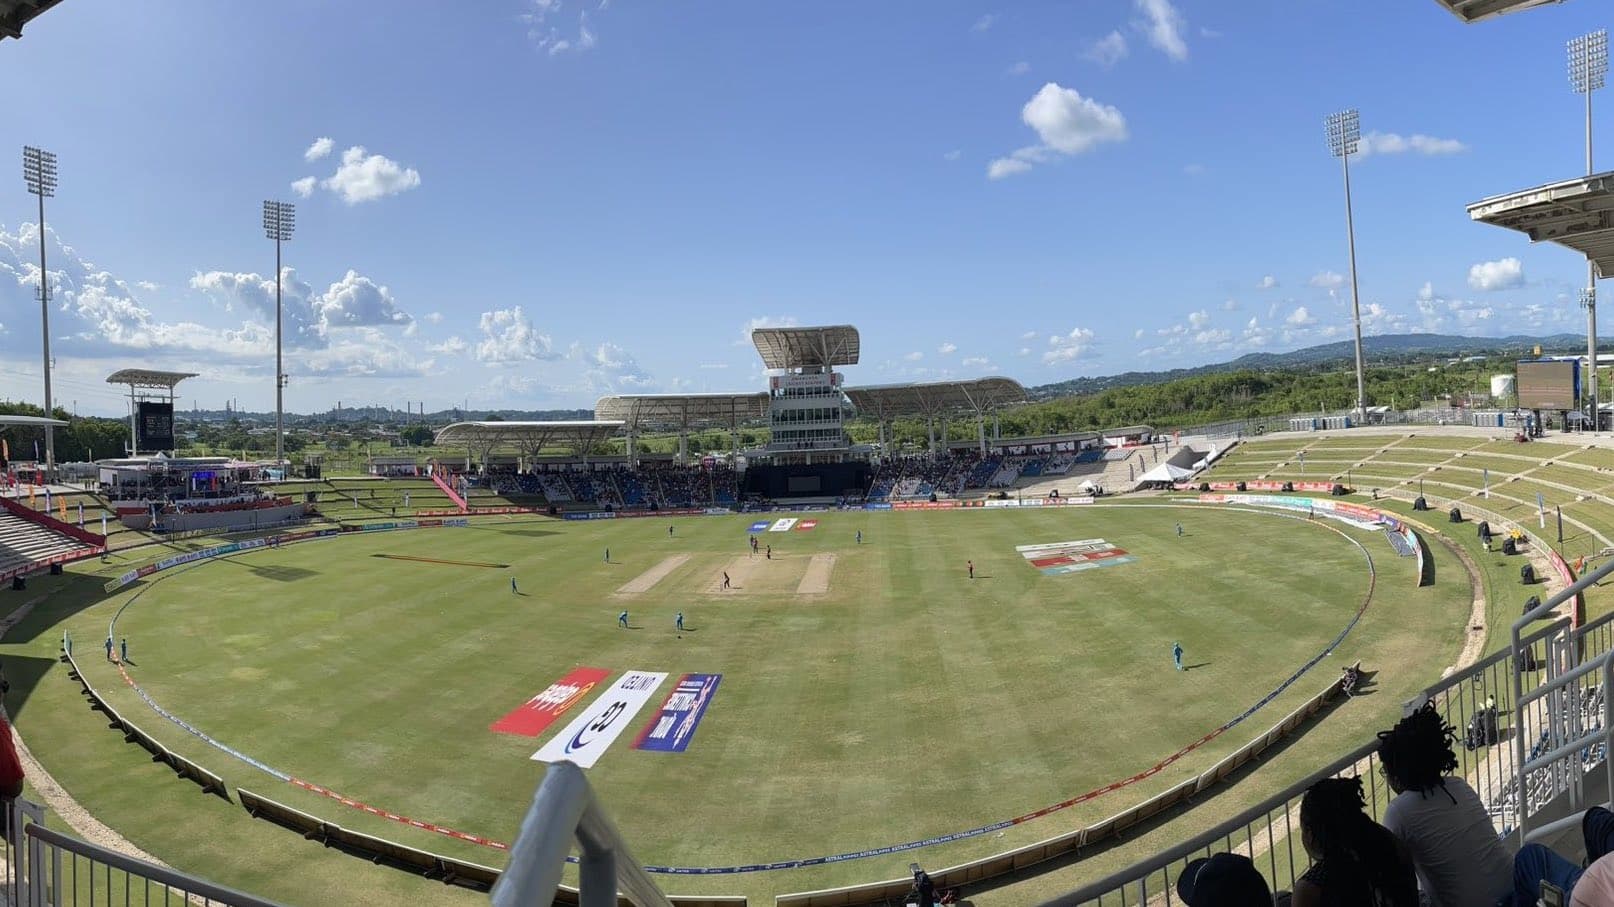 WI vs IND, 1st T20I | Brian Lara Stadium, Tarouba, Trinidad Pitch Report